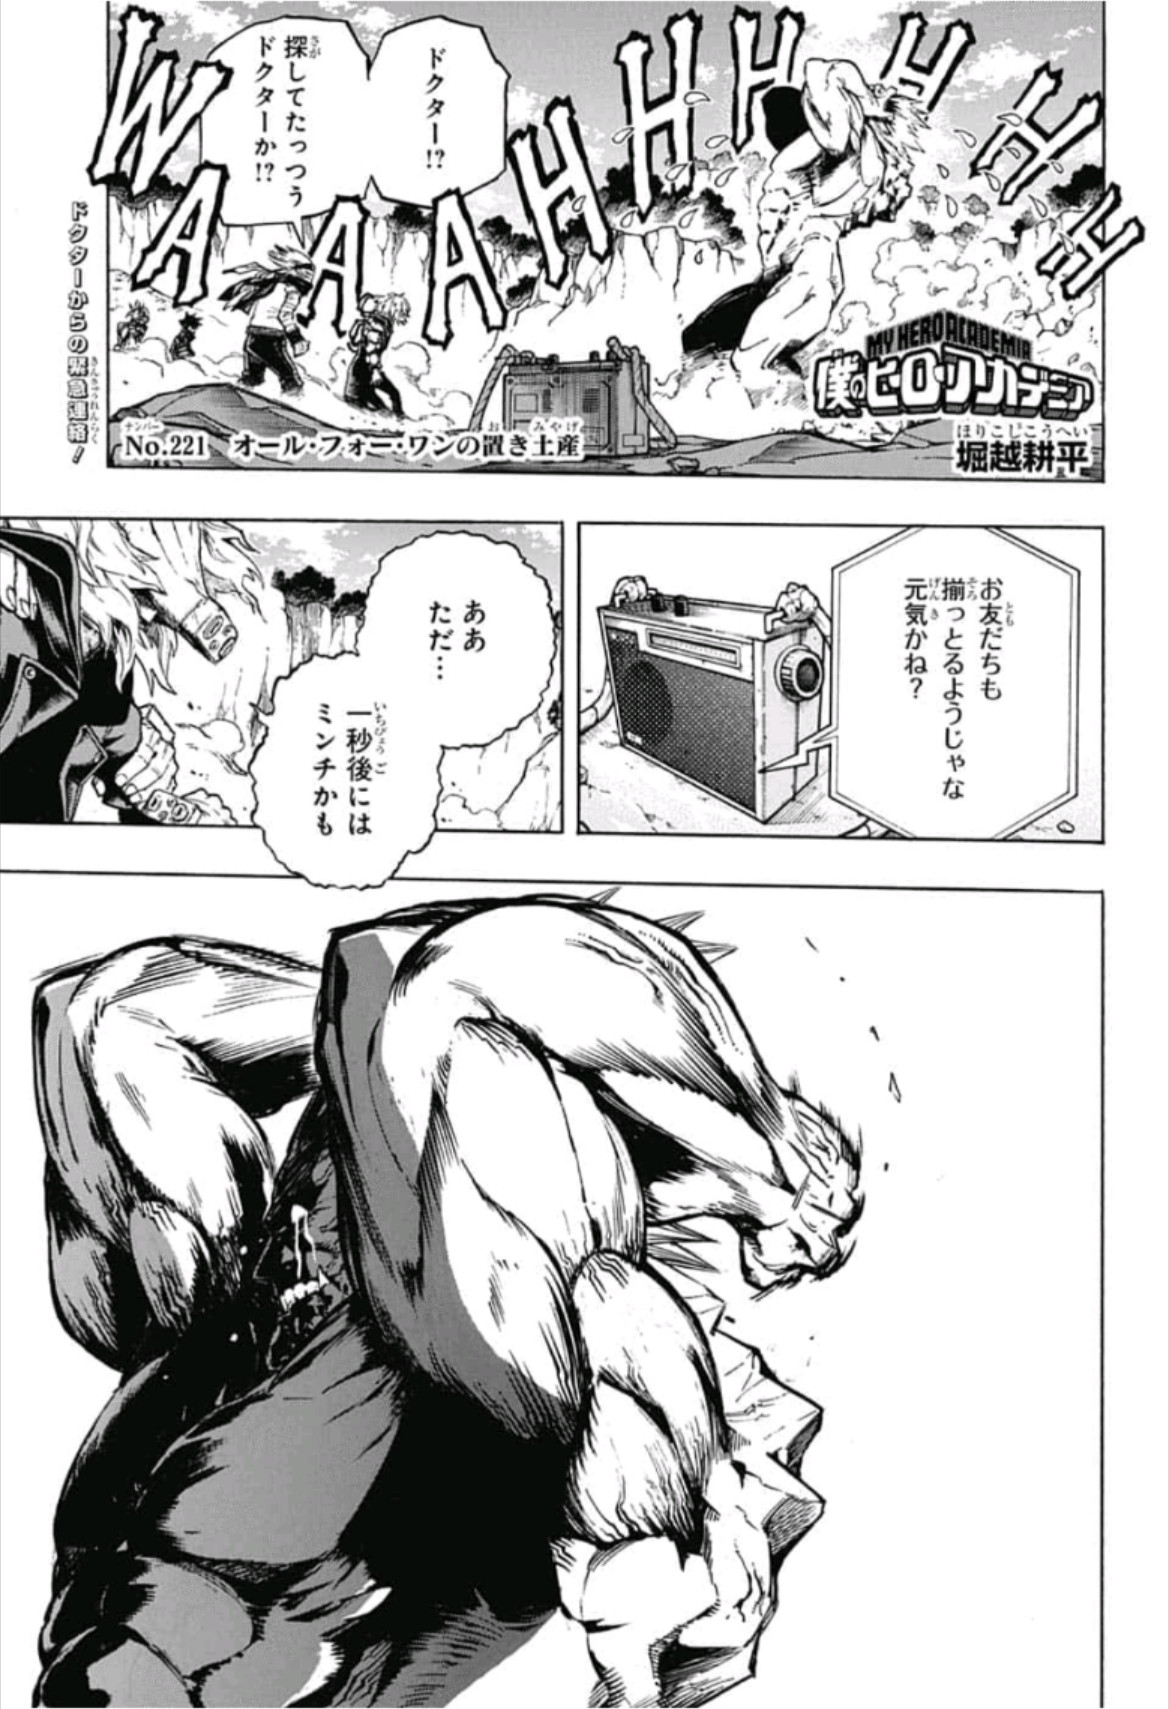 Boku no Hero Academia - Chapter 221 - Page 1